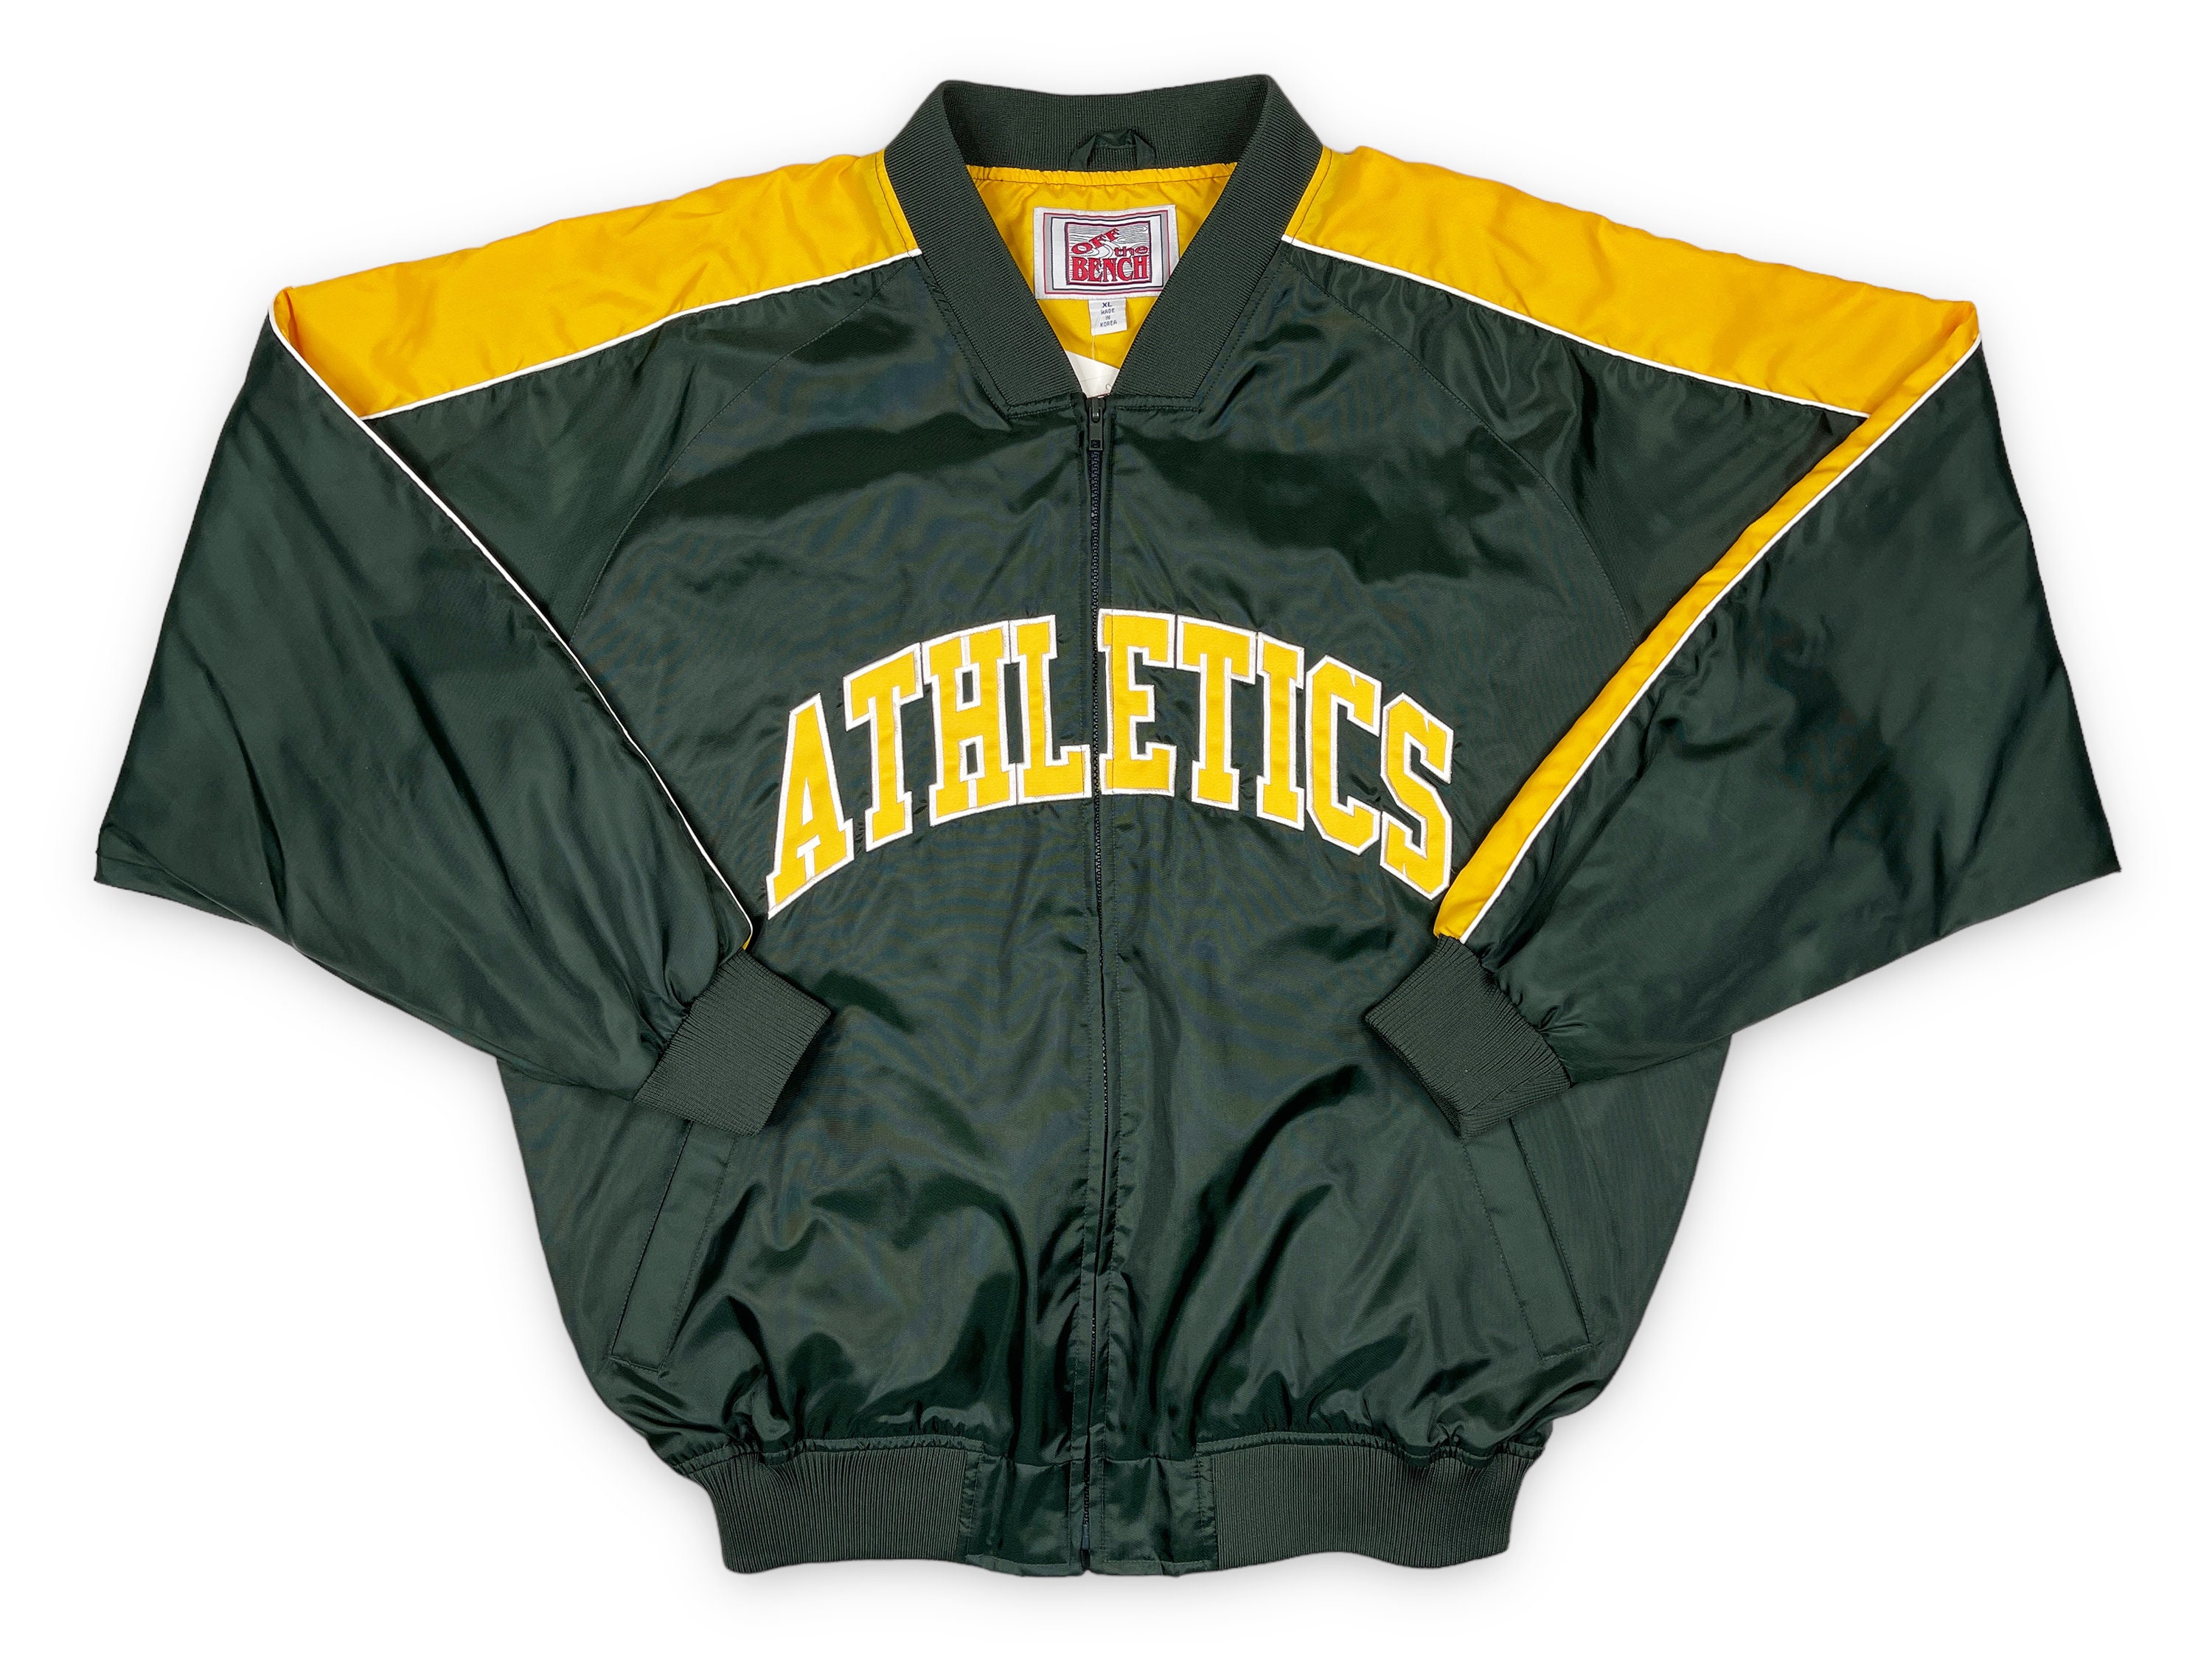 Glorydays Fine Goods Vintage Oakland Athletics Jersey Baseball Sweeney